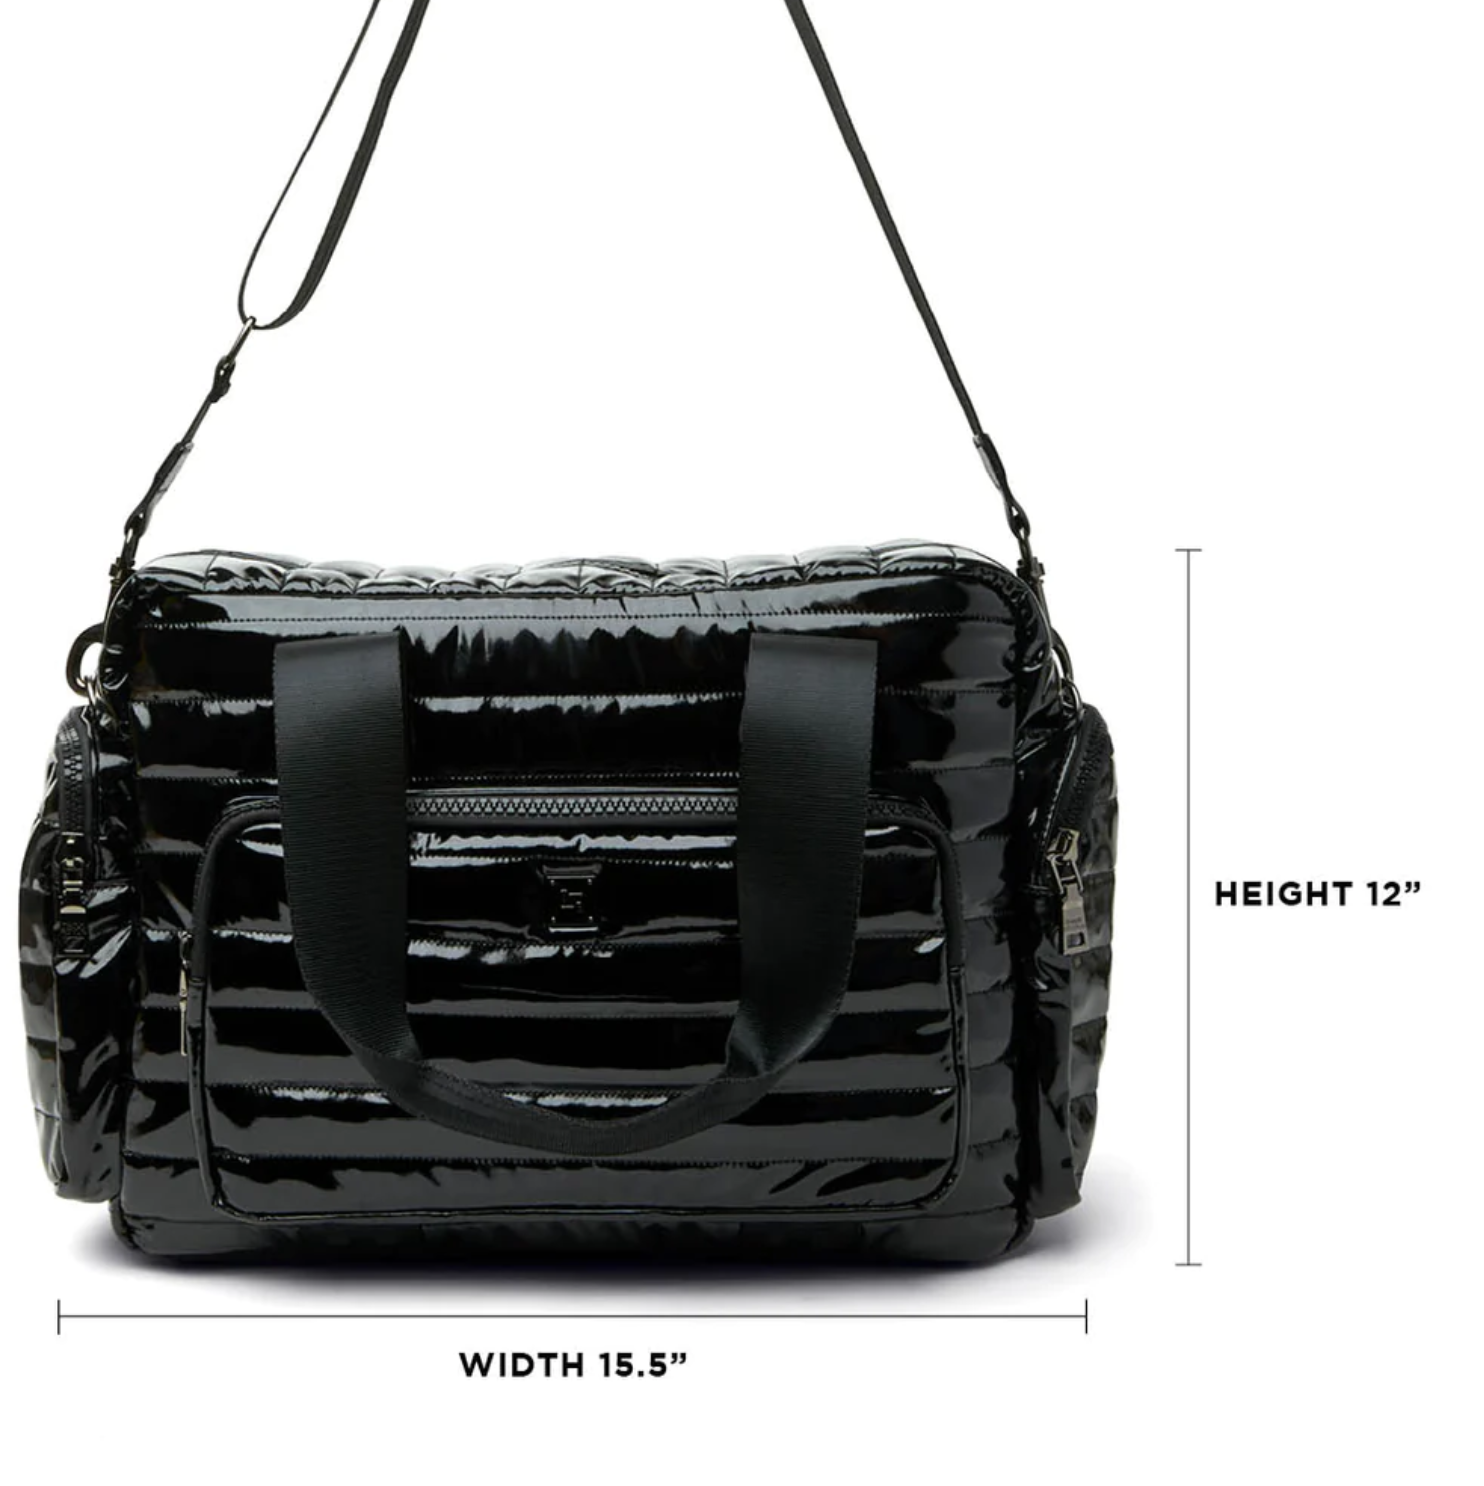 Voyager Travel Bag in Black Patent